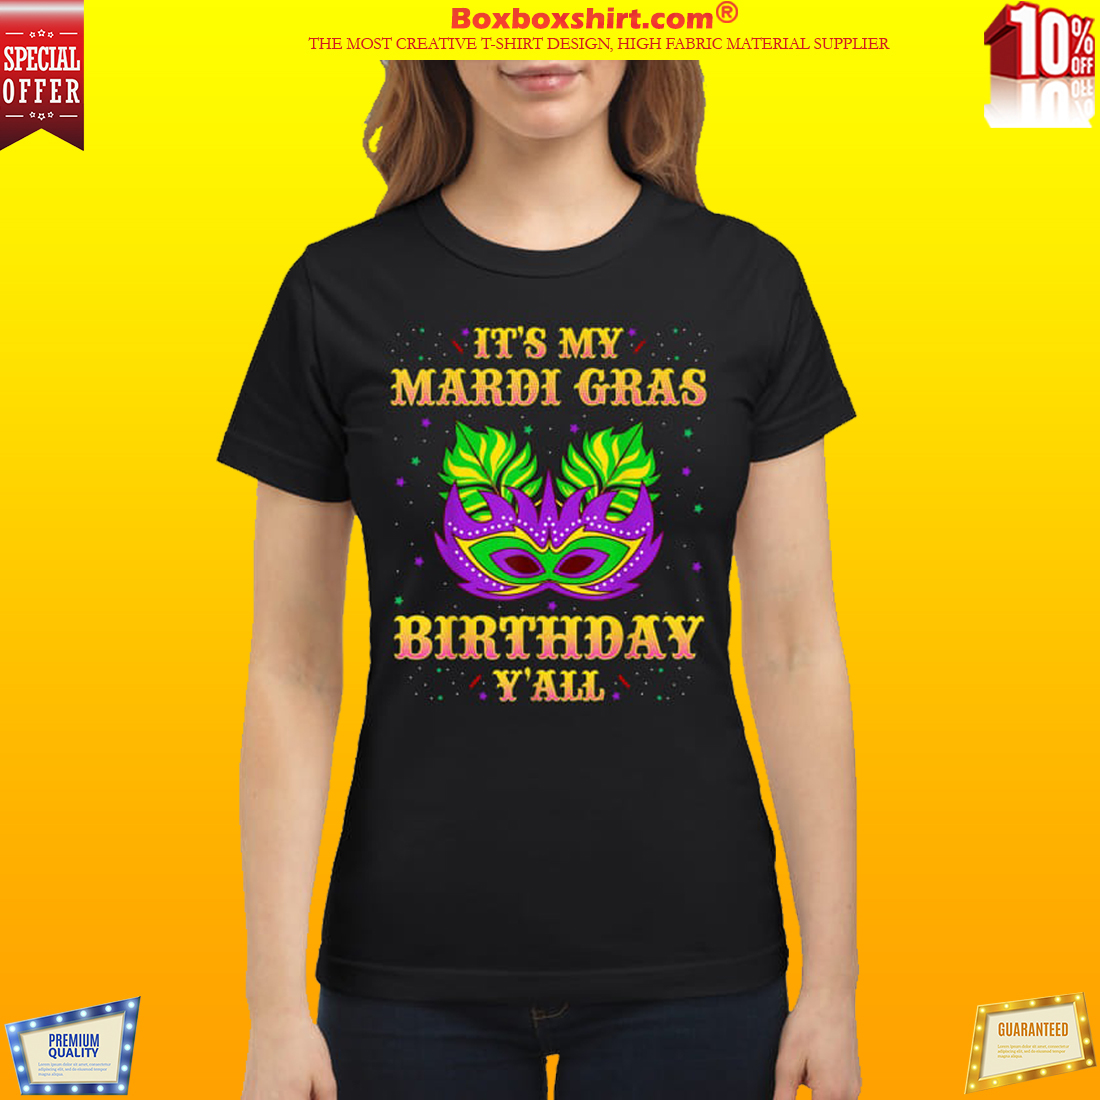 It's my Mardi Gras Birthday y'all shirt